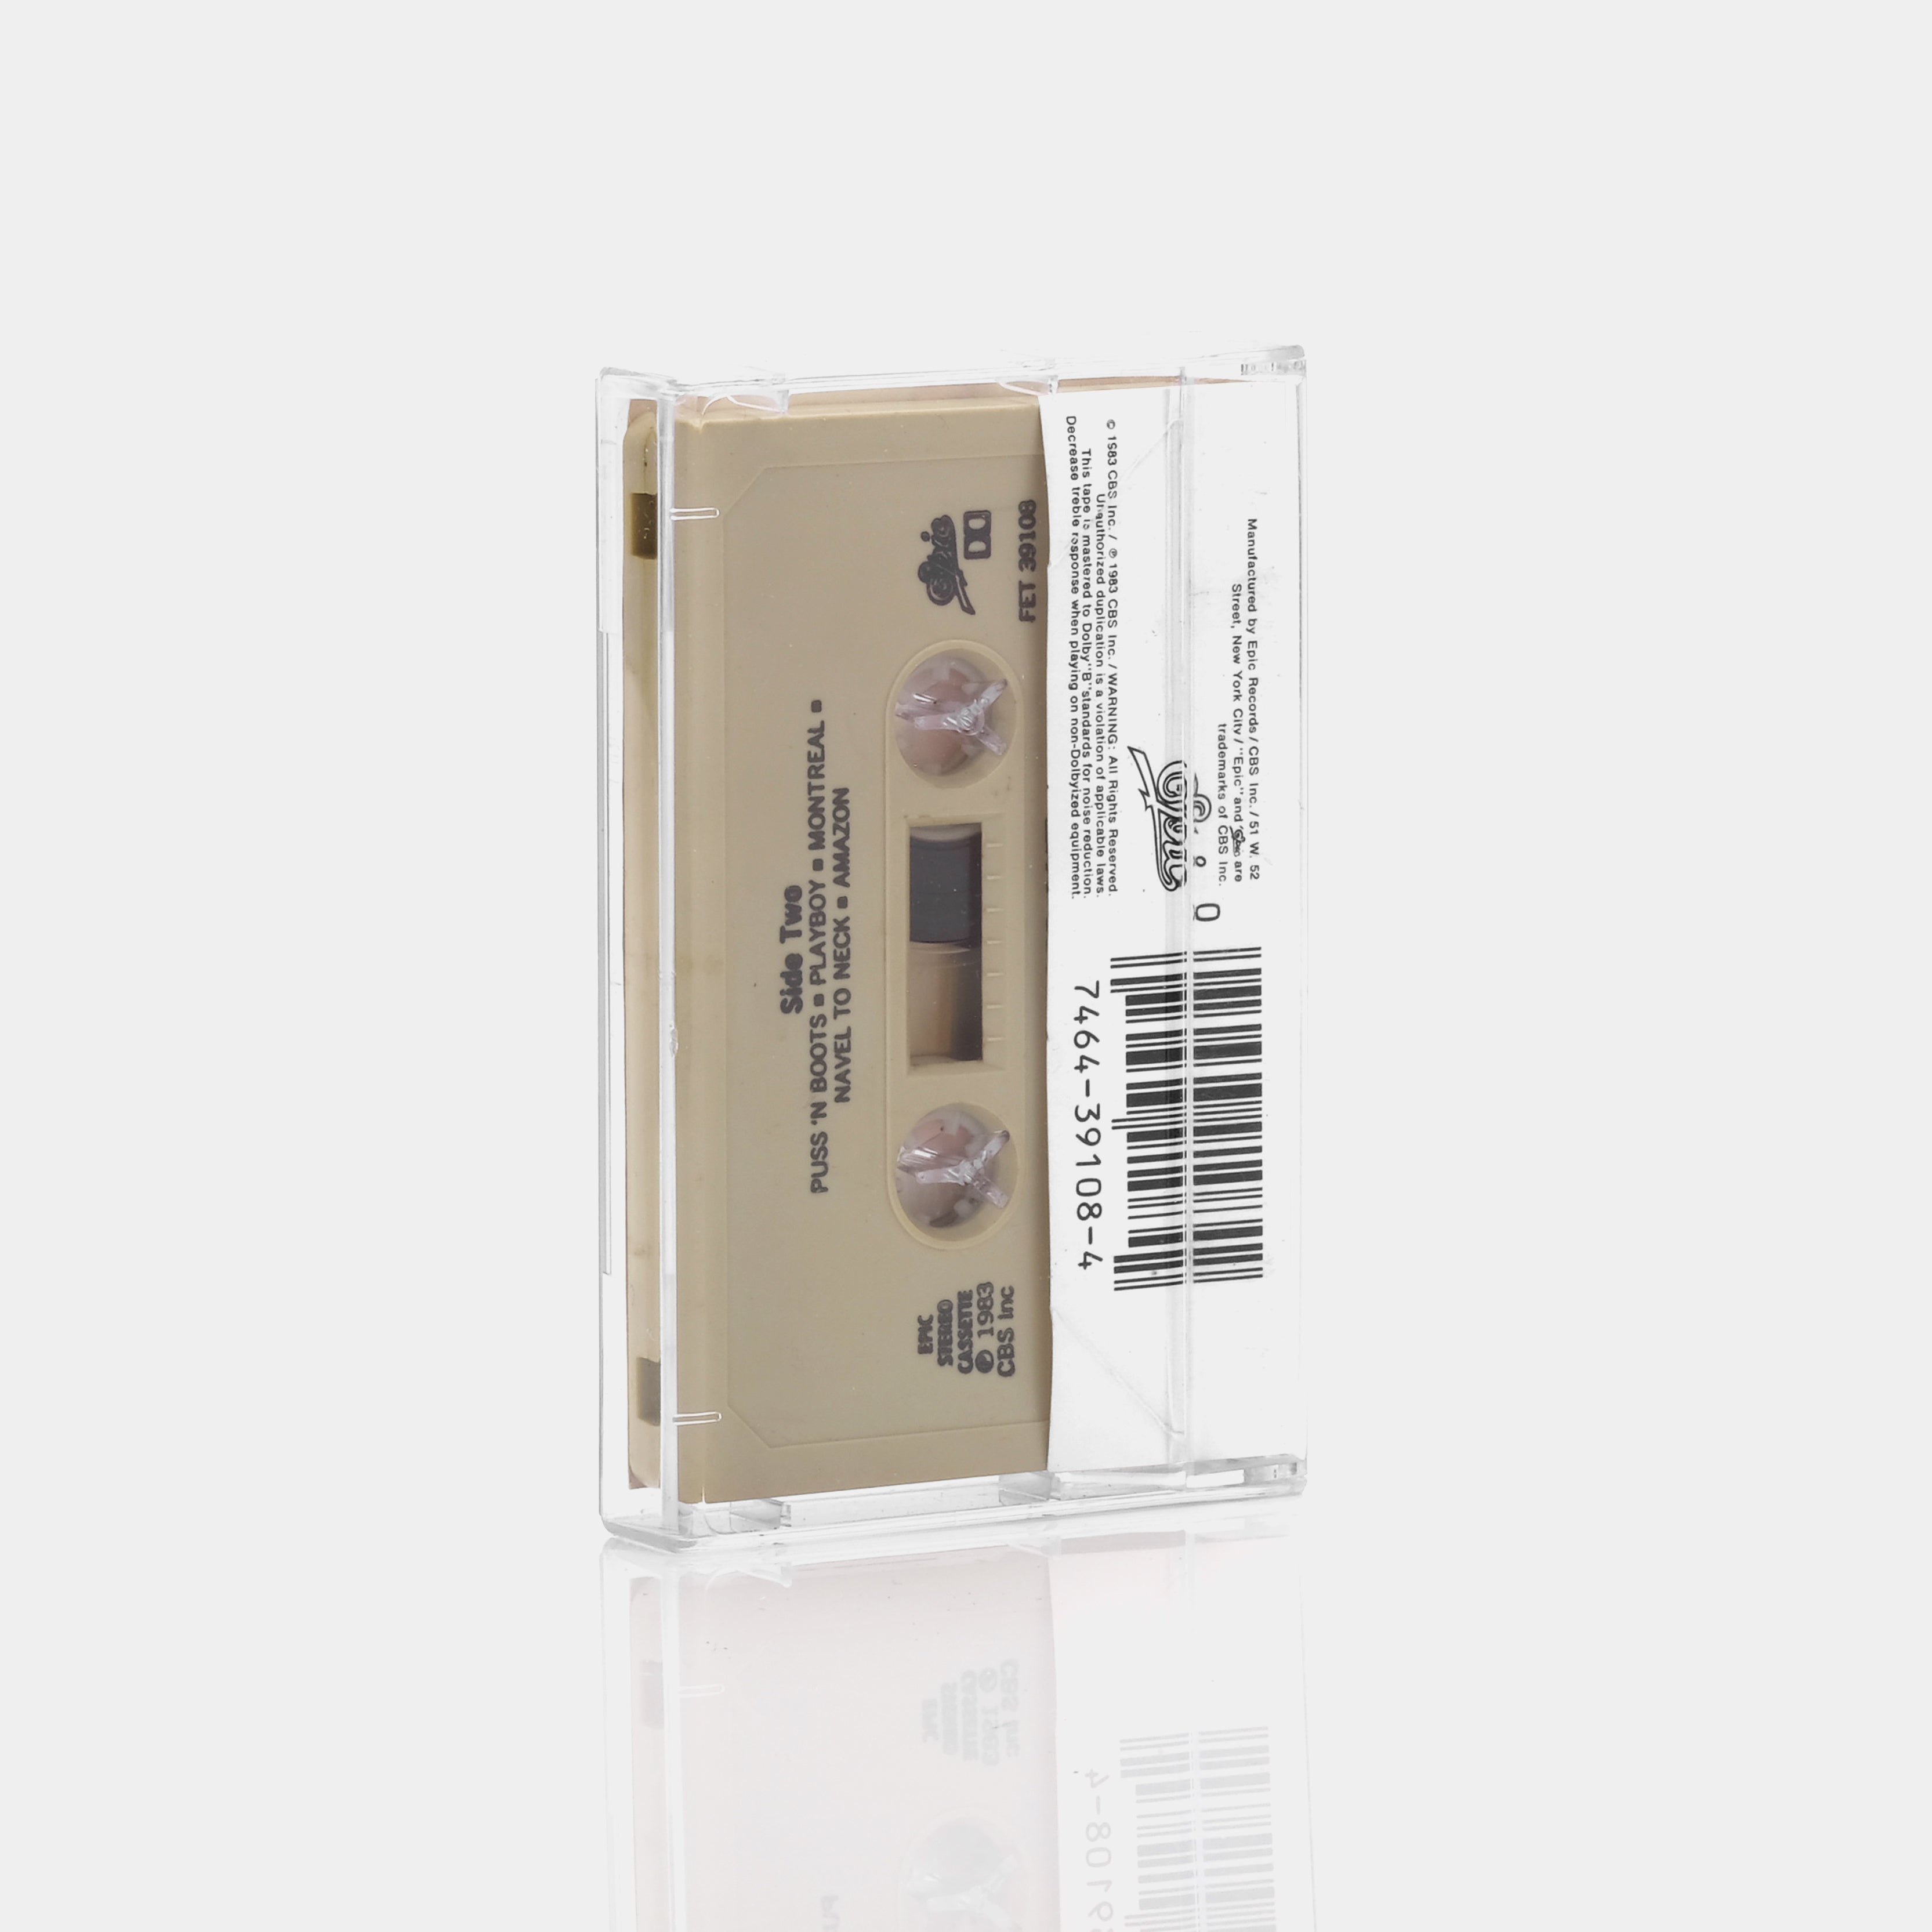 Adam Ant - Strip Cassette Tape